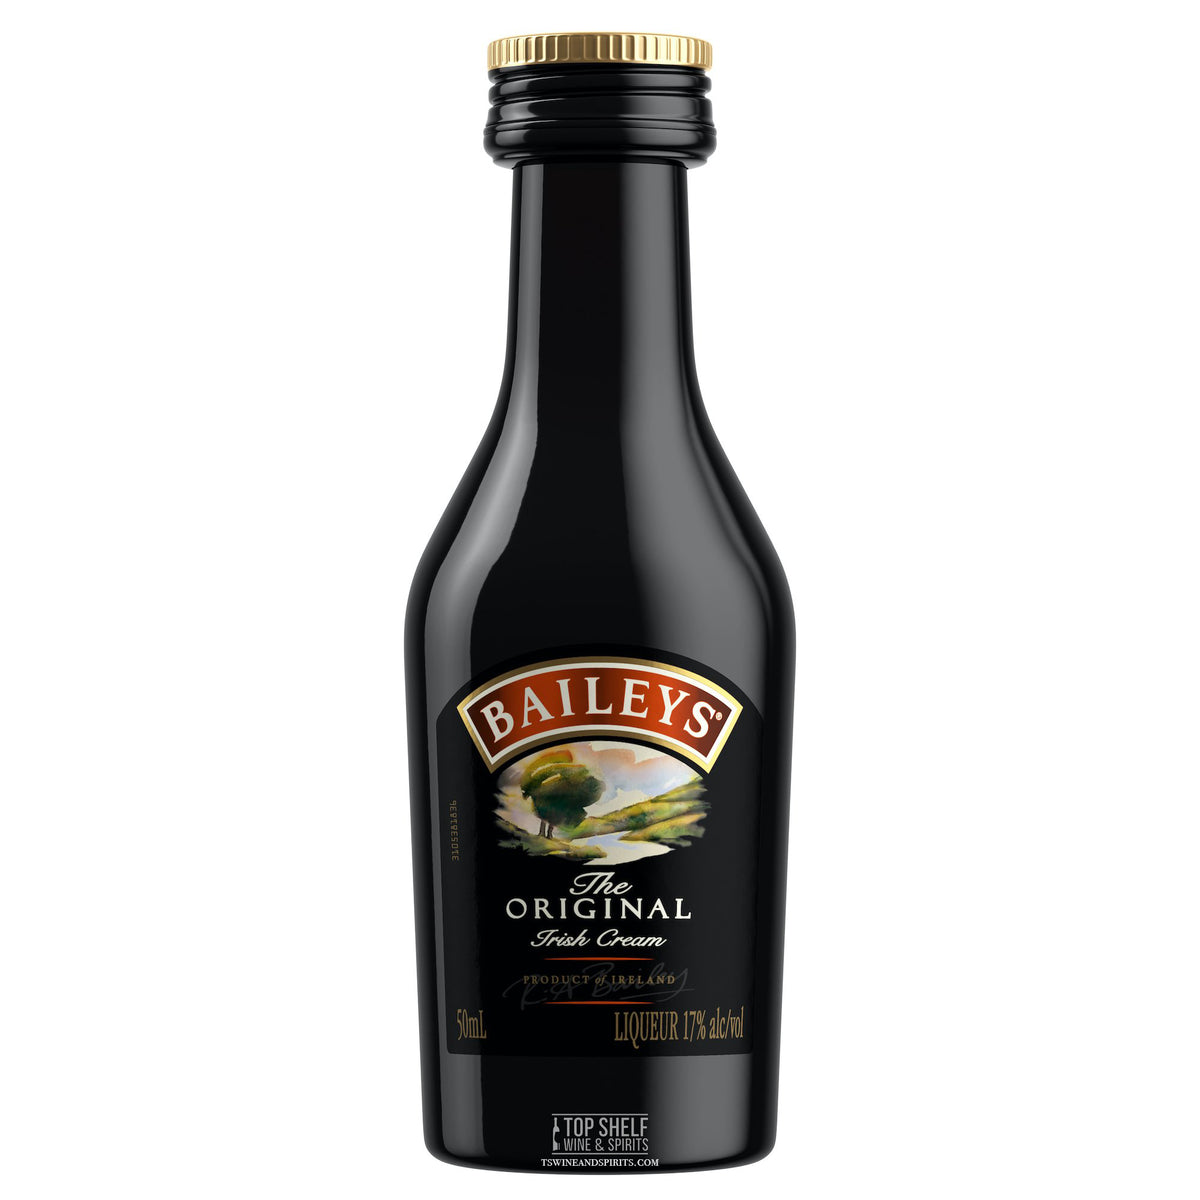 Order Baileys Sleeve Original bottles) Irish Cream (20 50ml